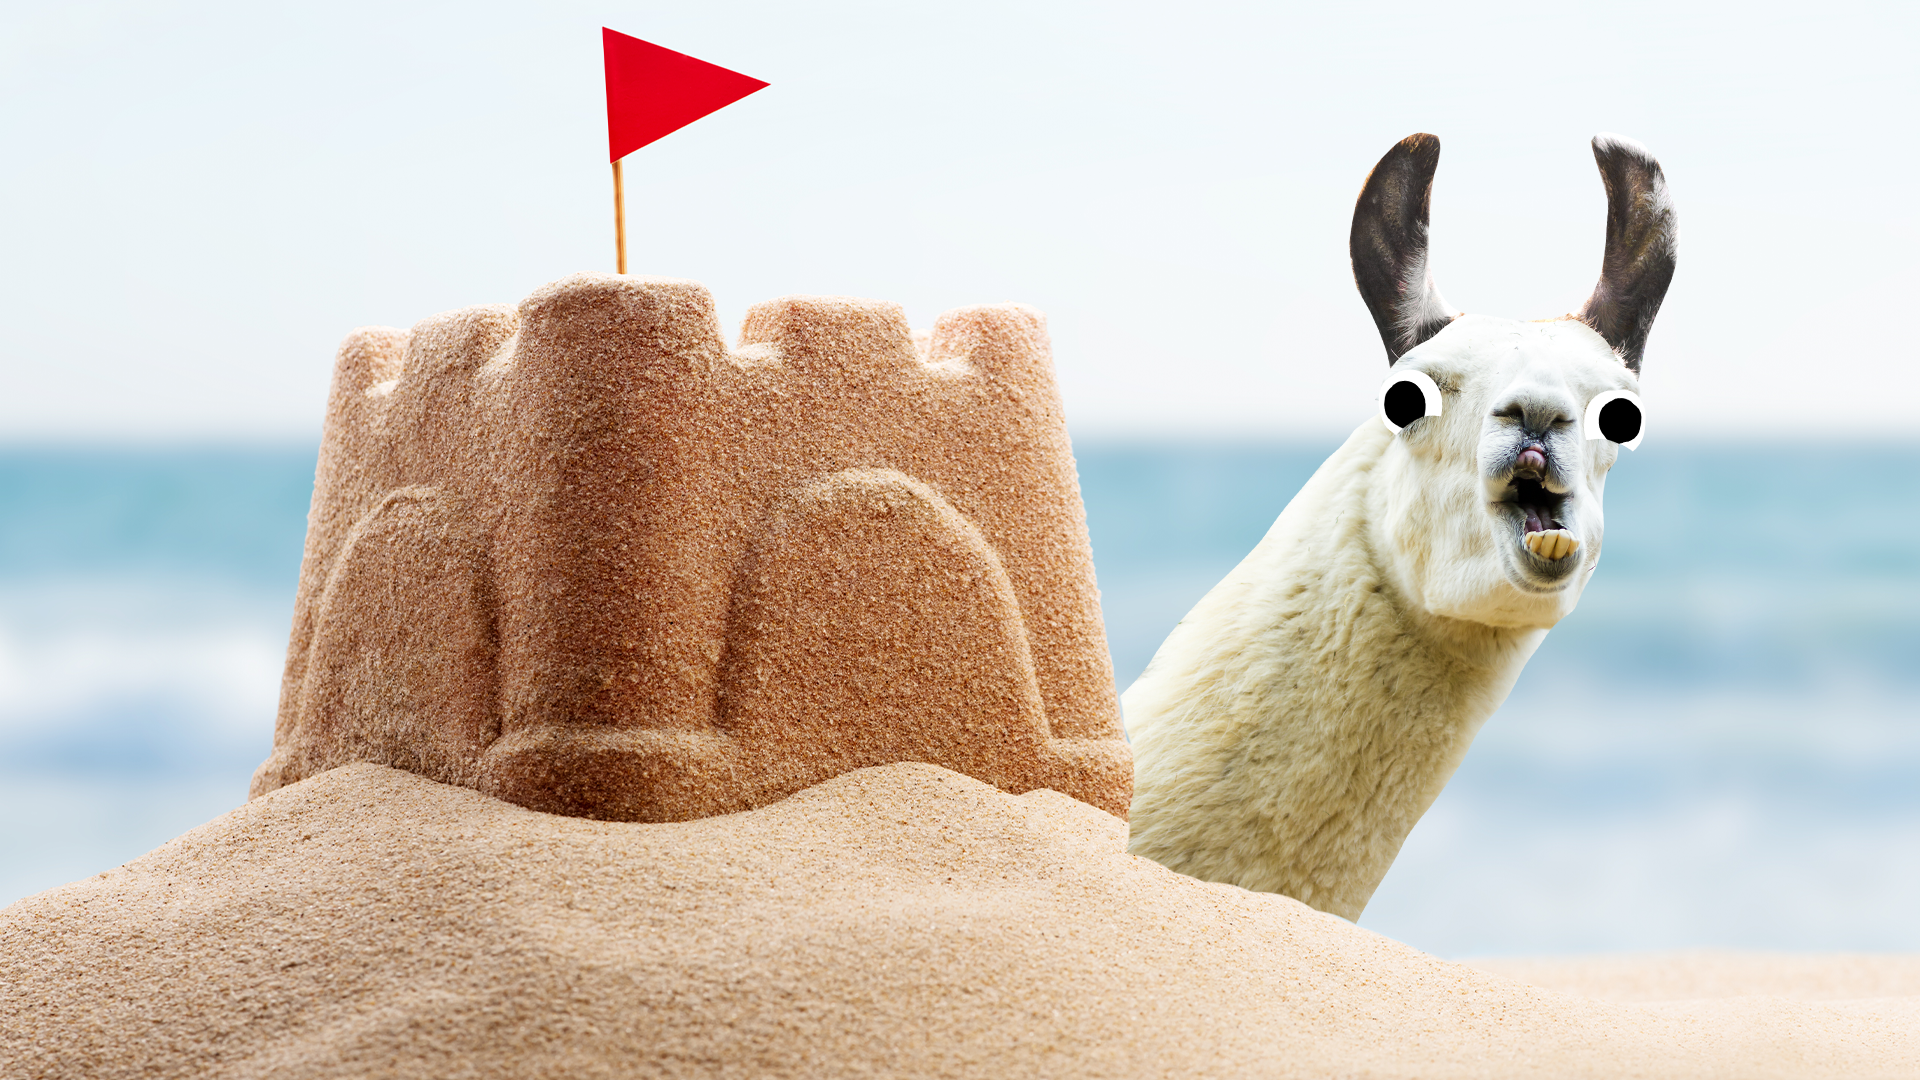 Derpy llama poking out behind sandcastle